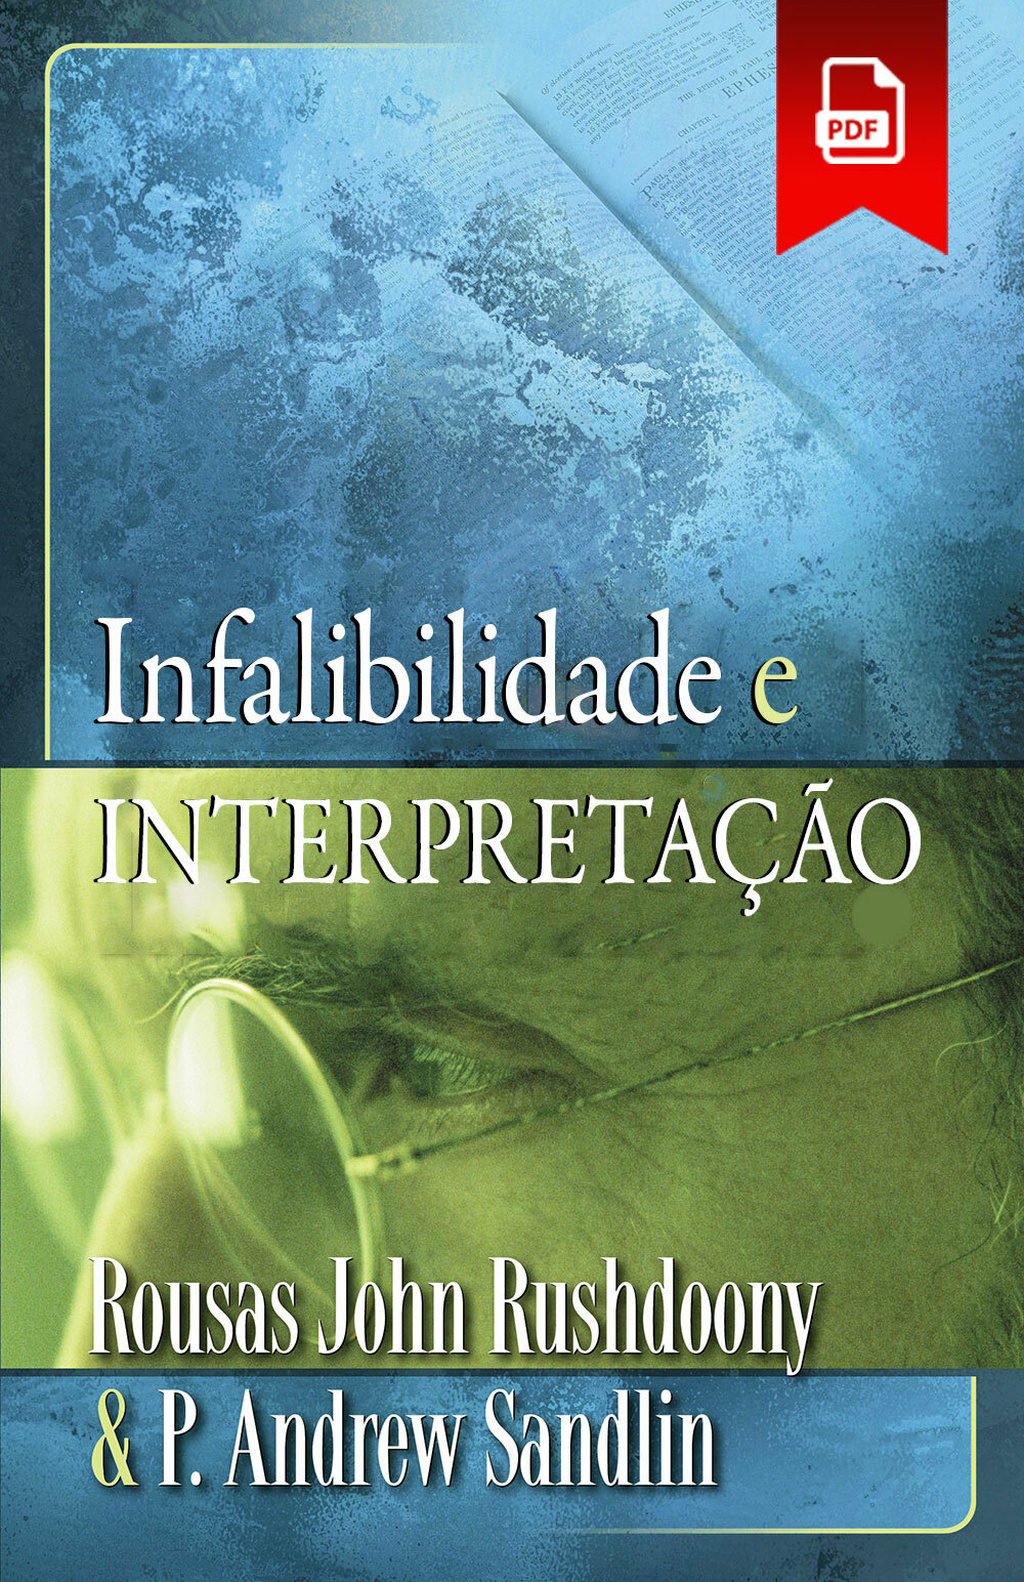 Infallibility Interpretation Portuguese pdf